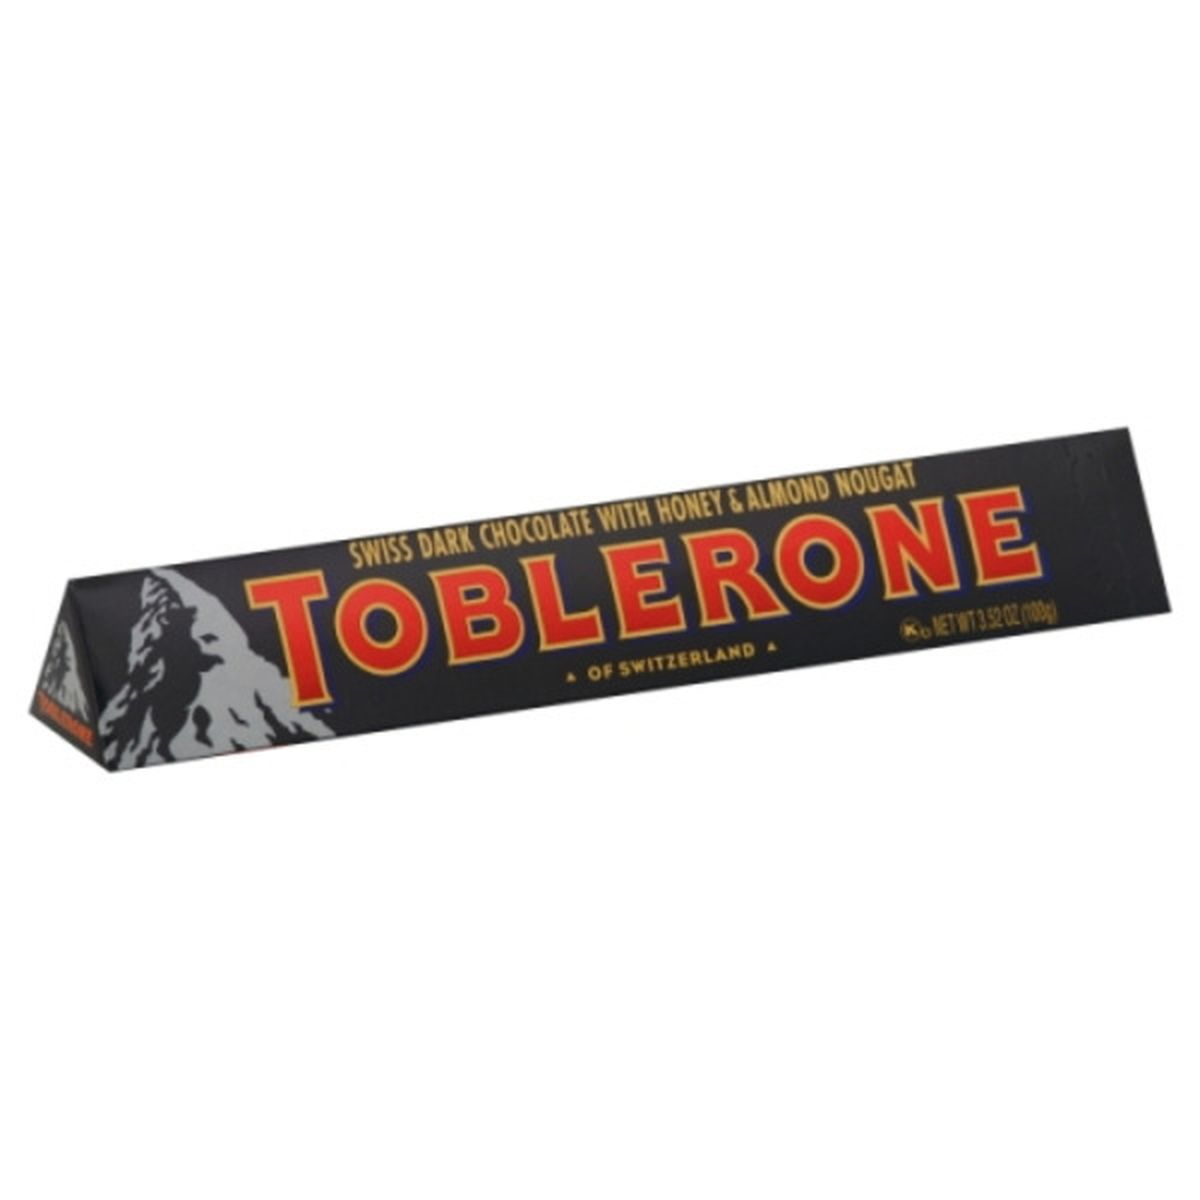 Calories in Toblerone Dark Chocolate, Swiss, with Honey & Almond Nougat